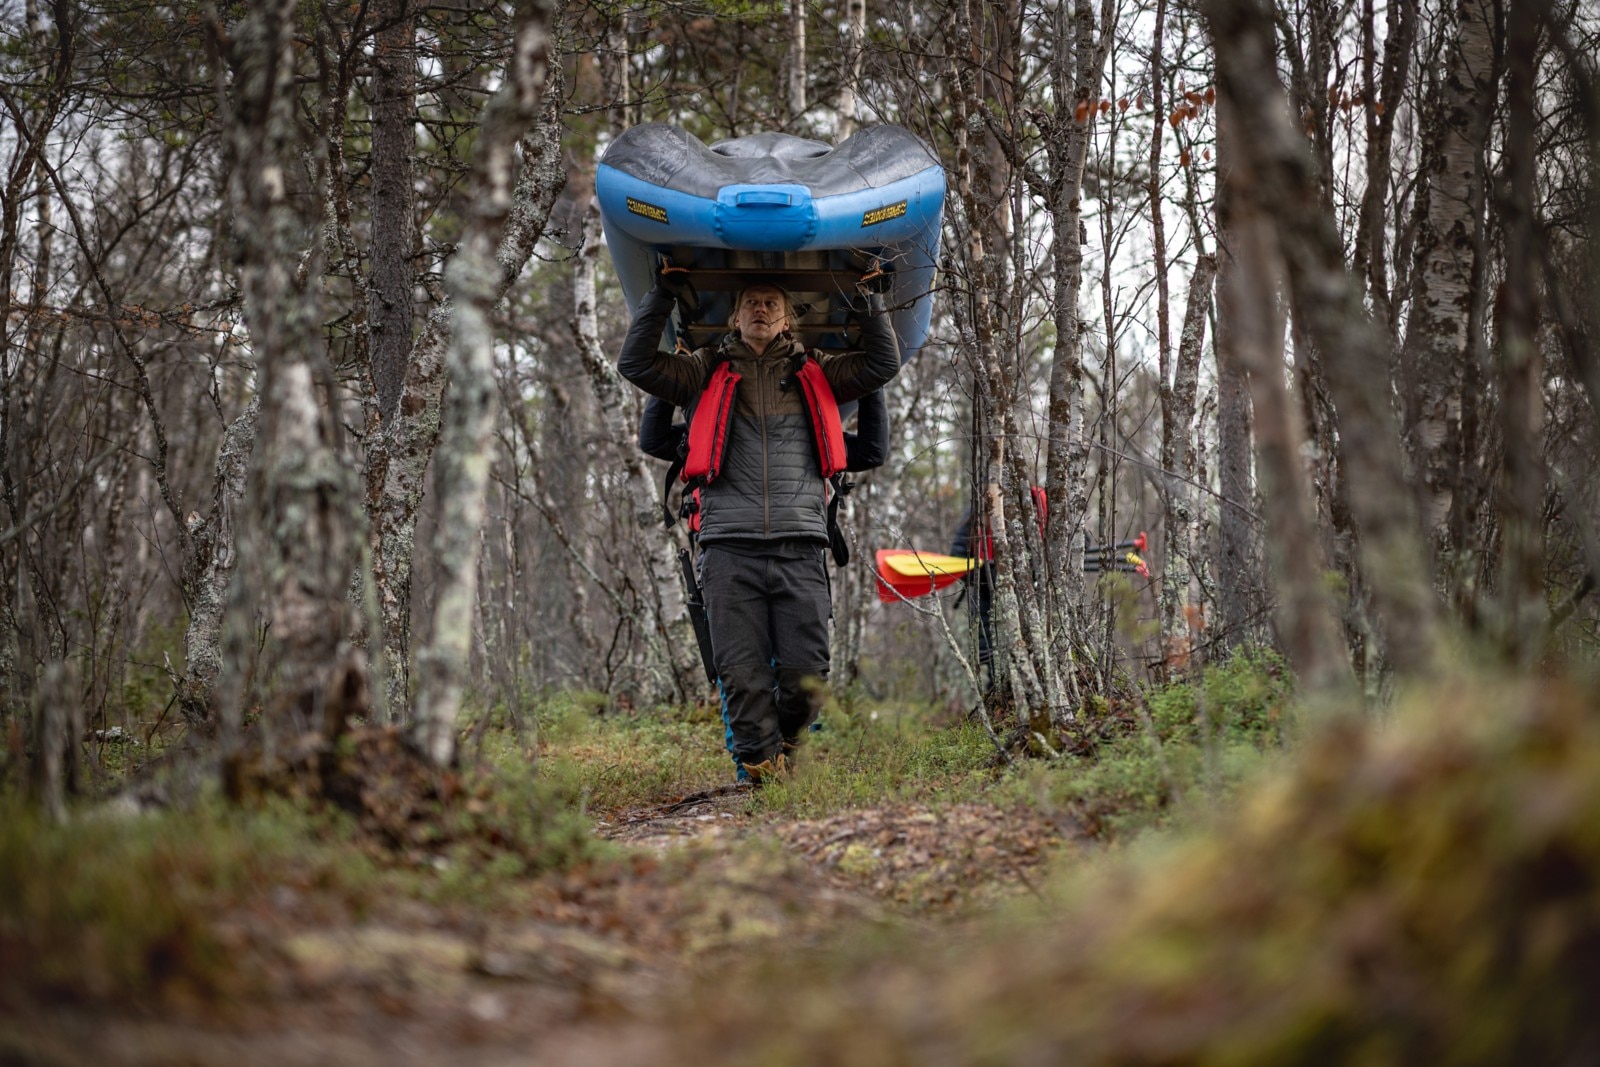 Jukka and Jarppi carry a canoe